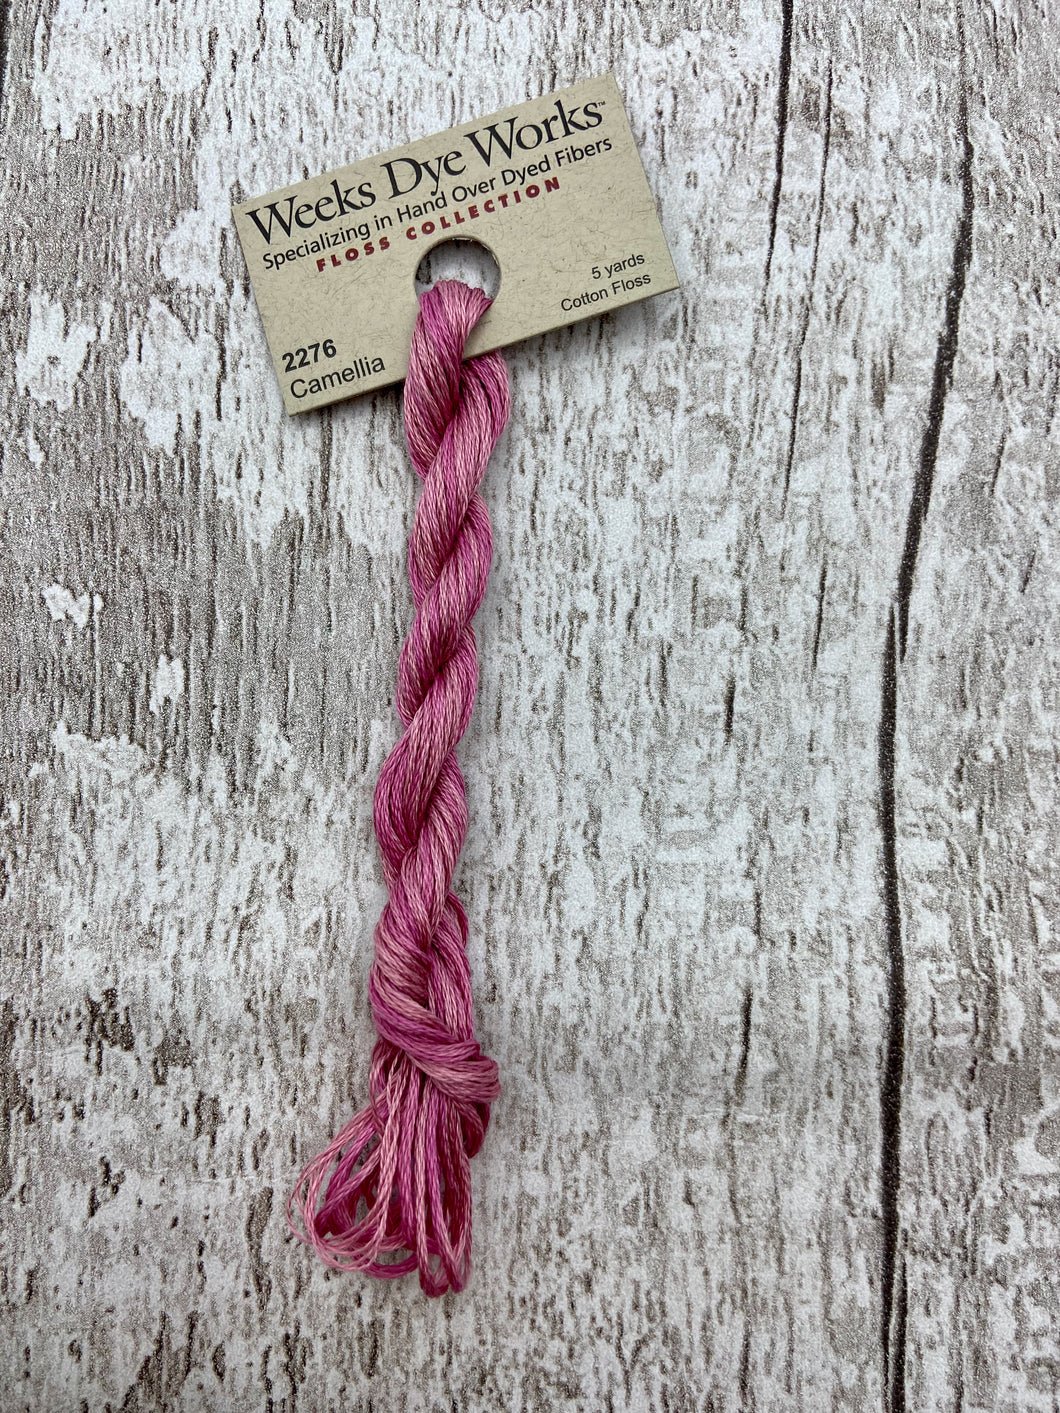 Camellia (#2276), Weeks Dye Works 6-strand cotton floss